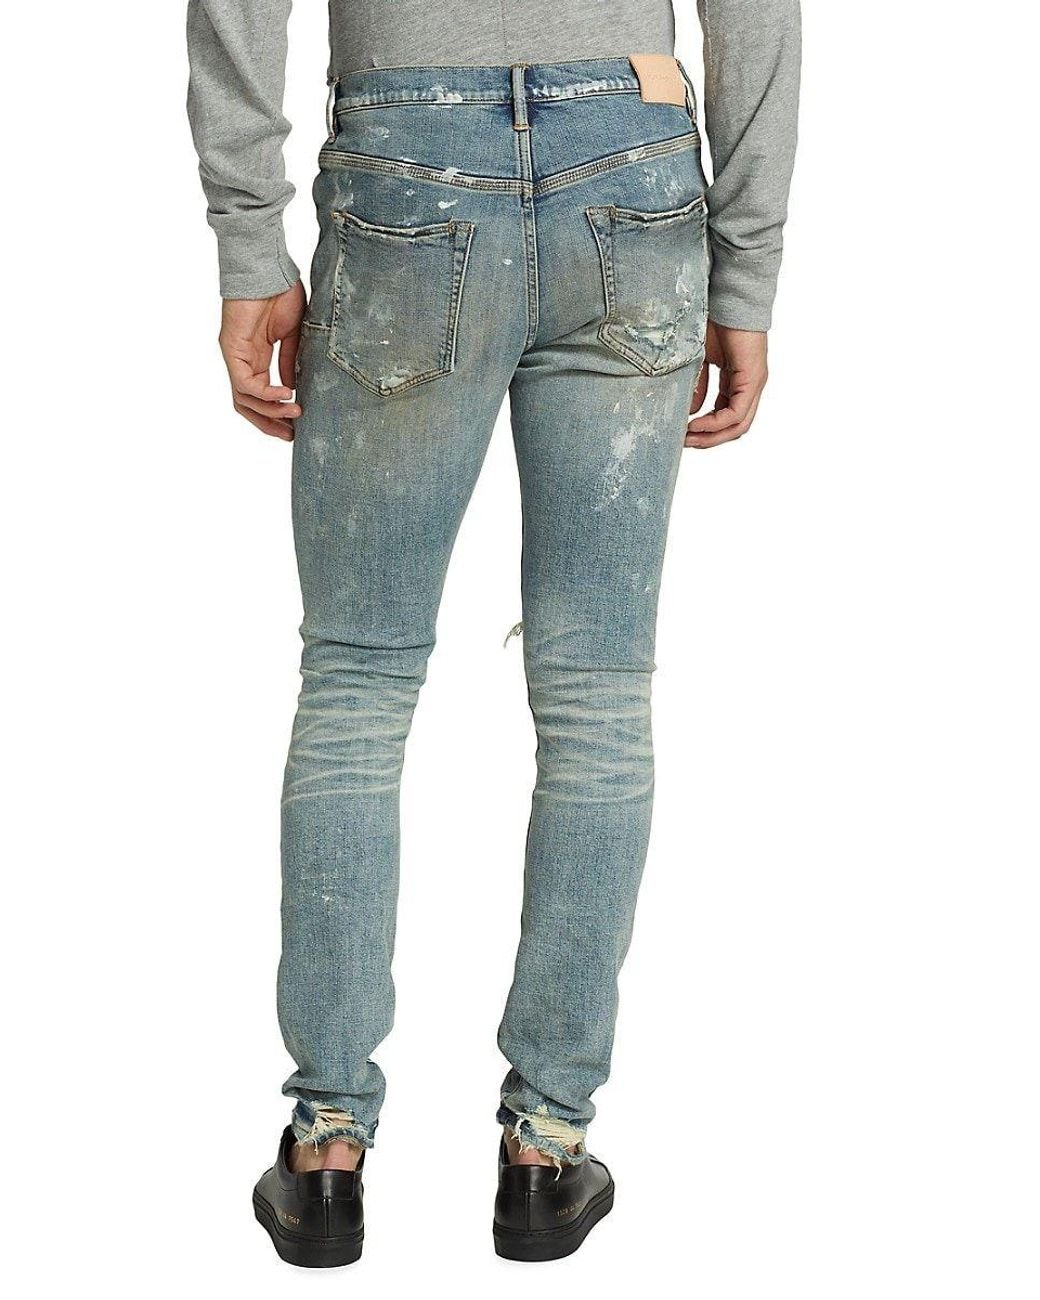 Purple Brand Jeans Men Slim Straight Mid Rise Blue P005 $295 Size